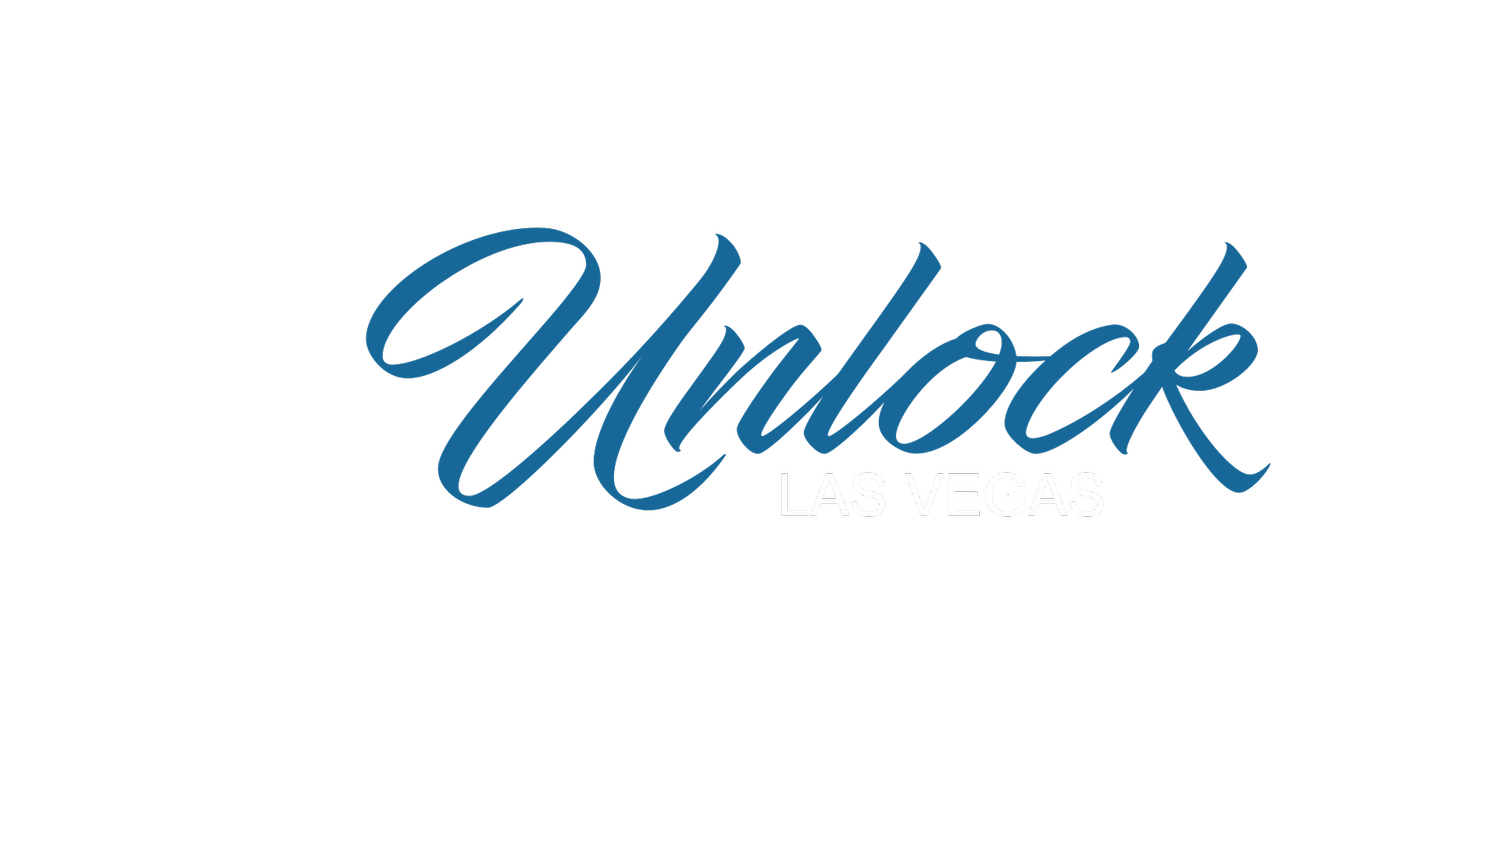 Unlock Las Vegas - The Highest Rated Tour Operator In Vegas